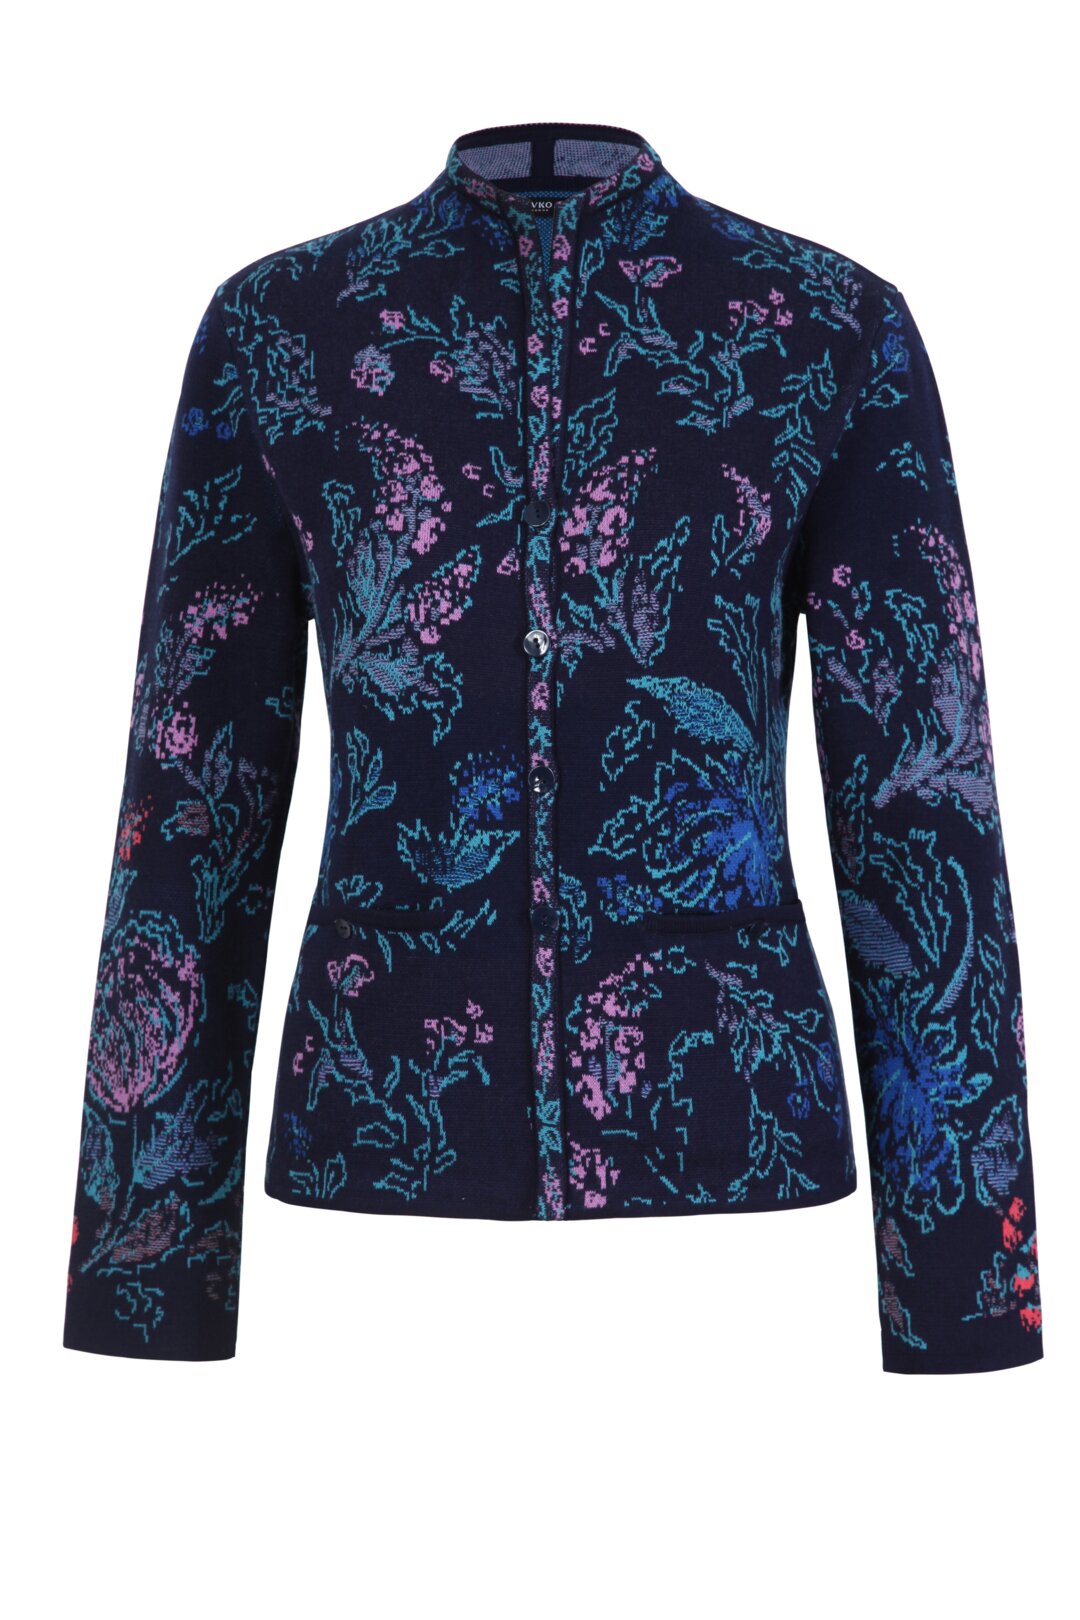 Jacquard Jacket, Flower Pattern